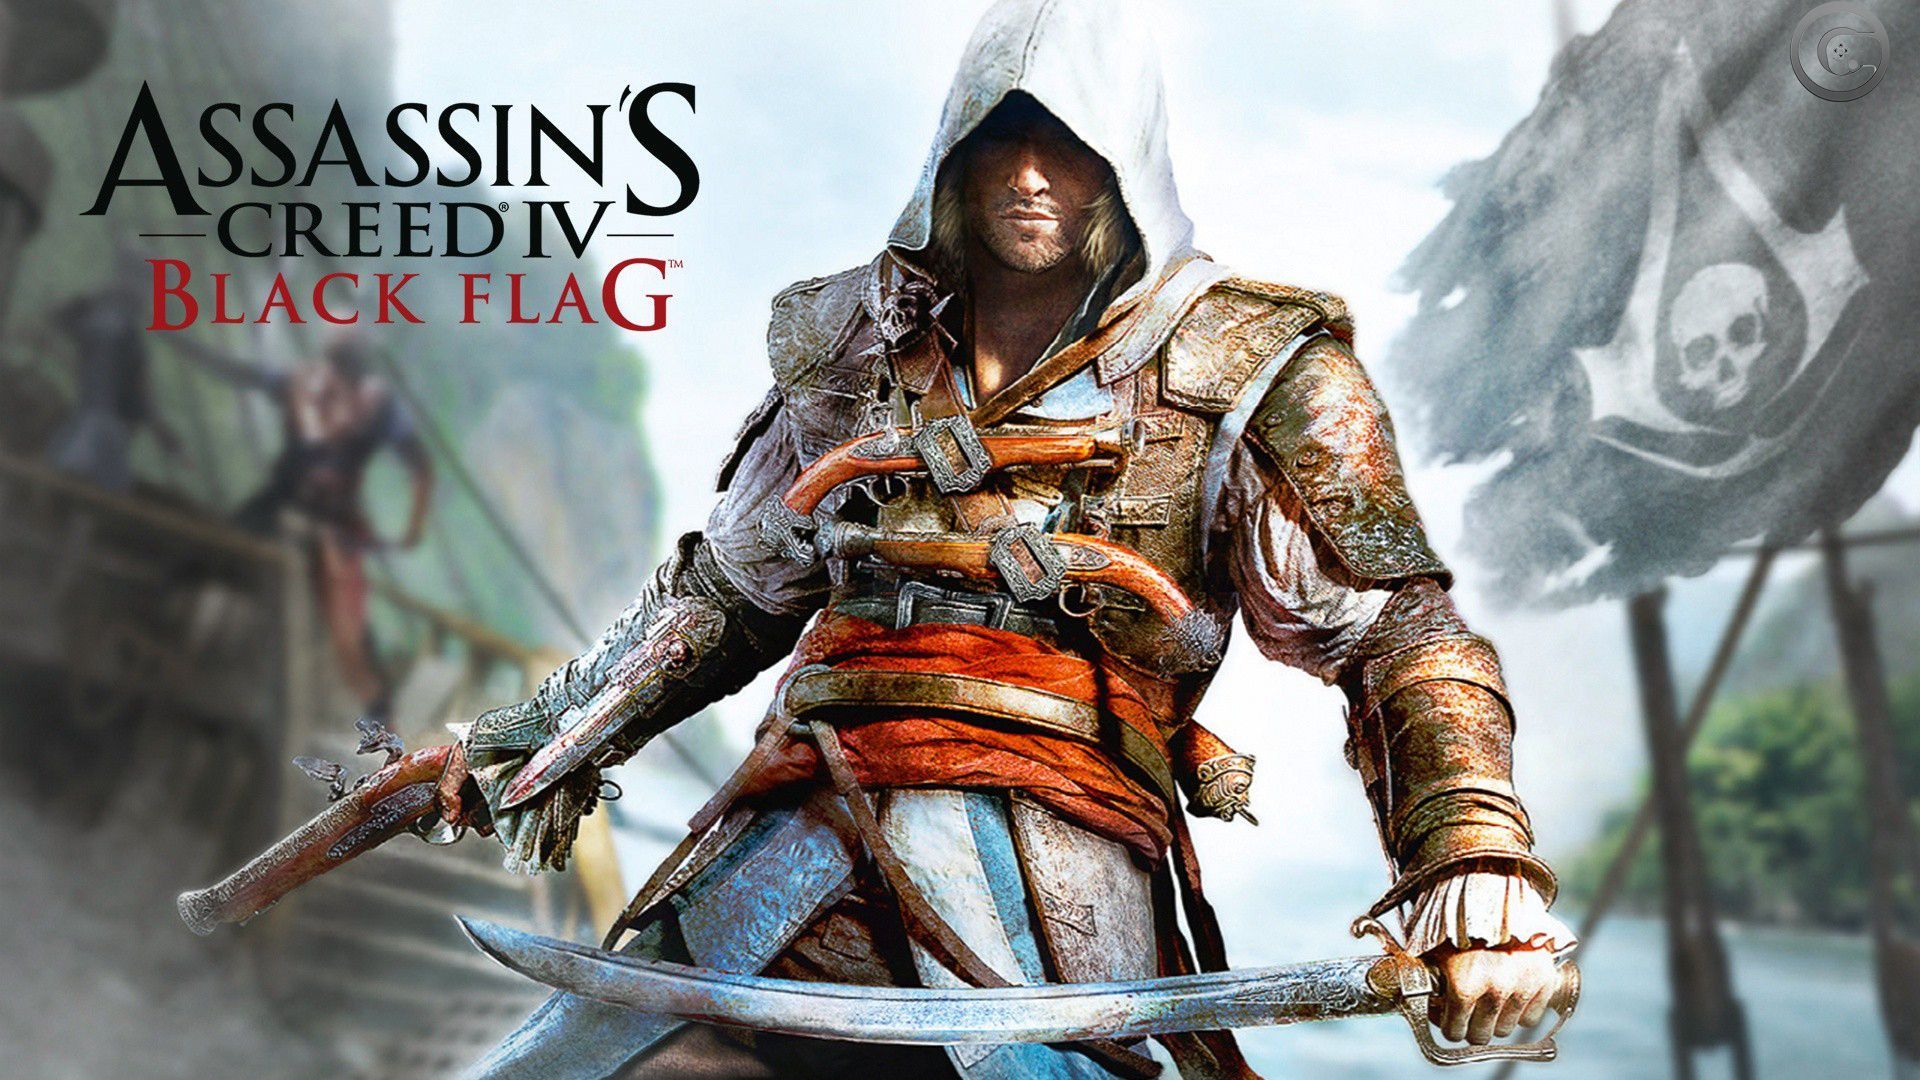 Assassin's Creed IV: Black Flag HD Wallpaper. Assassin's Creed